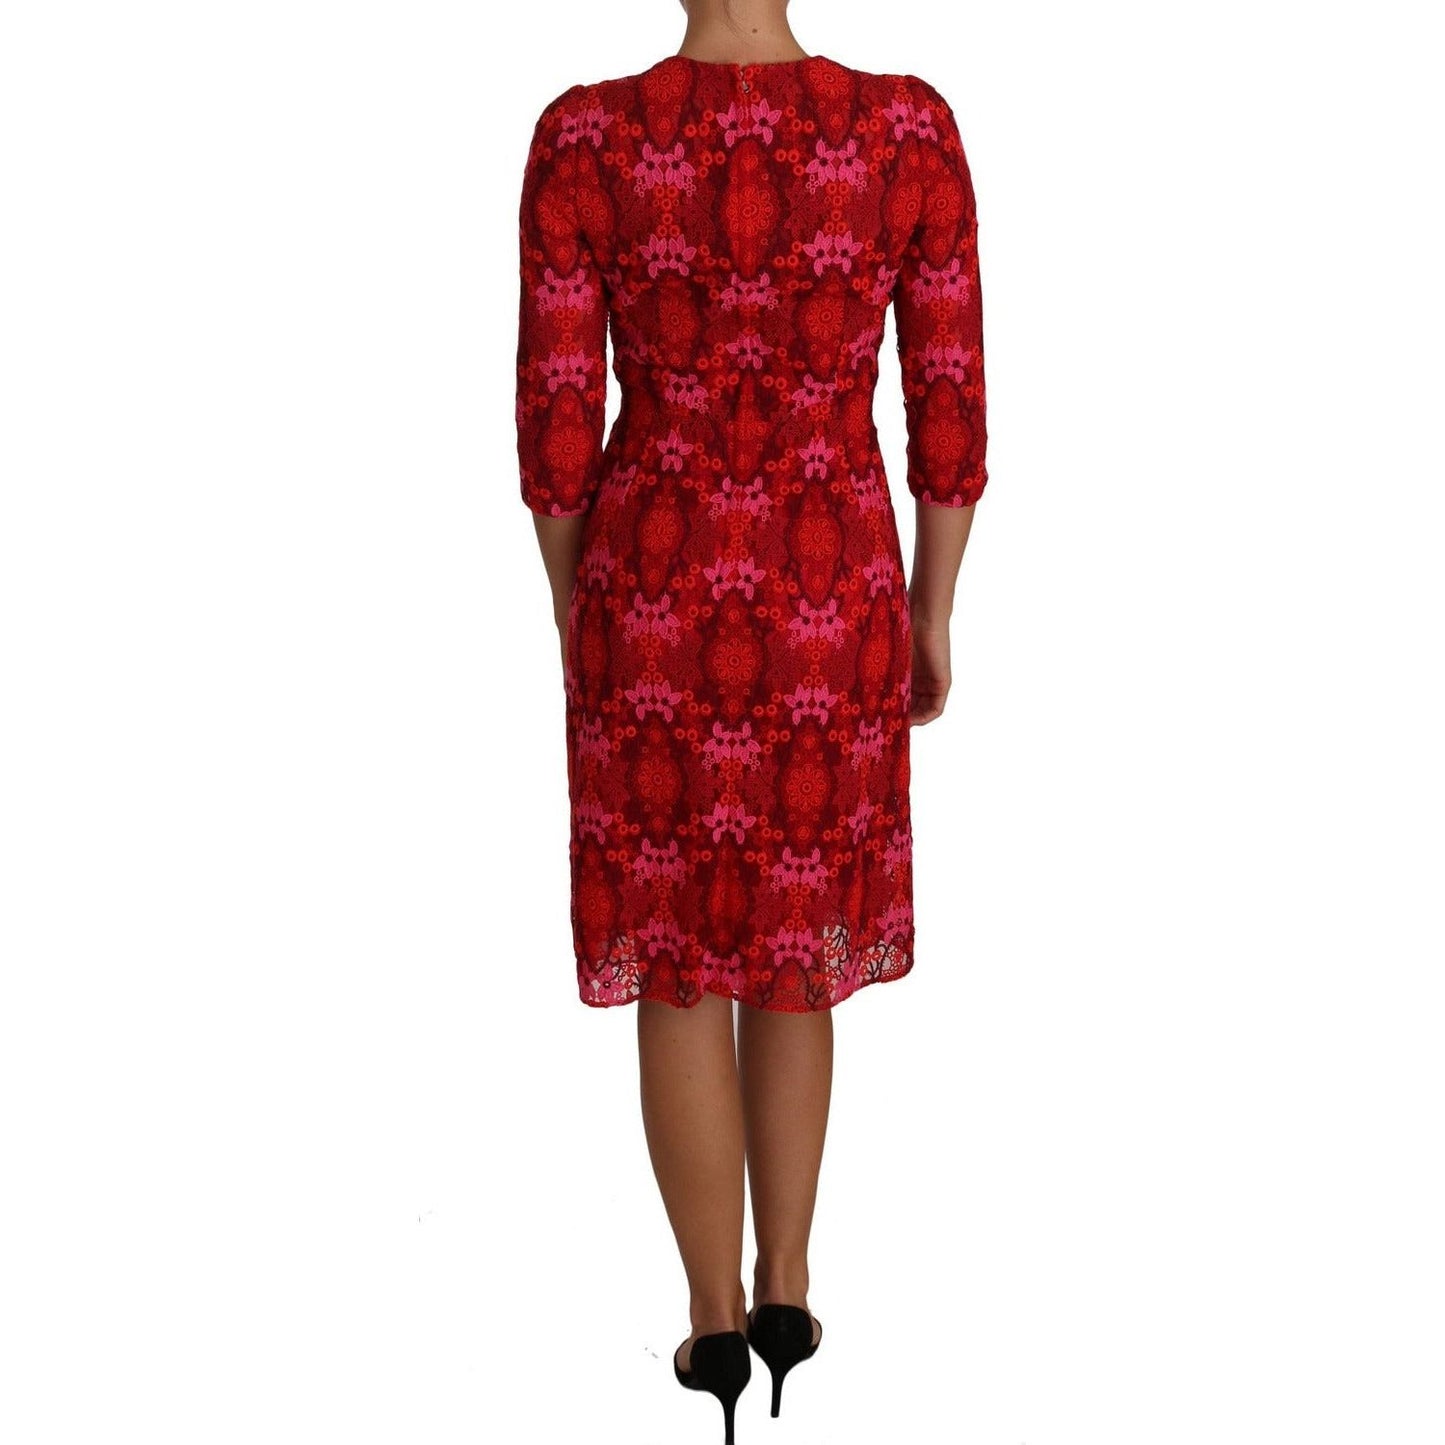 Dolce & Gabbana Elegant Floral Crochet Knee-Length Dress floral-crochet-lace-red-pink-sheath-dress 635562-floral-crochet-lace-red-pink-sheath-dress-1.jpg